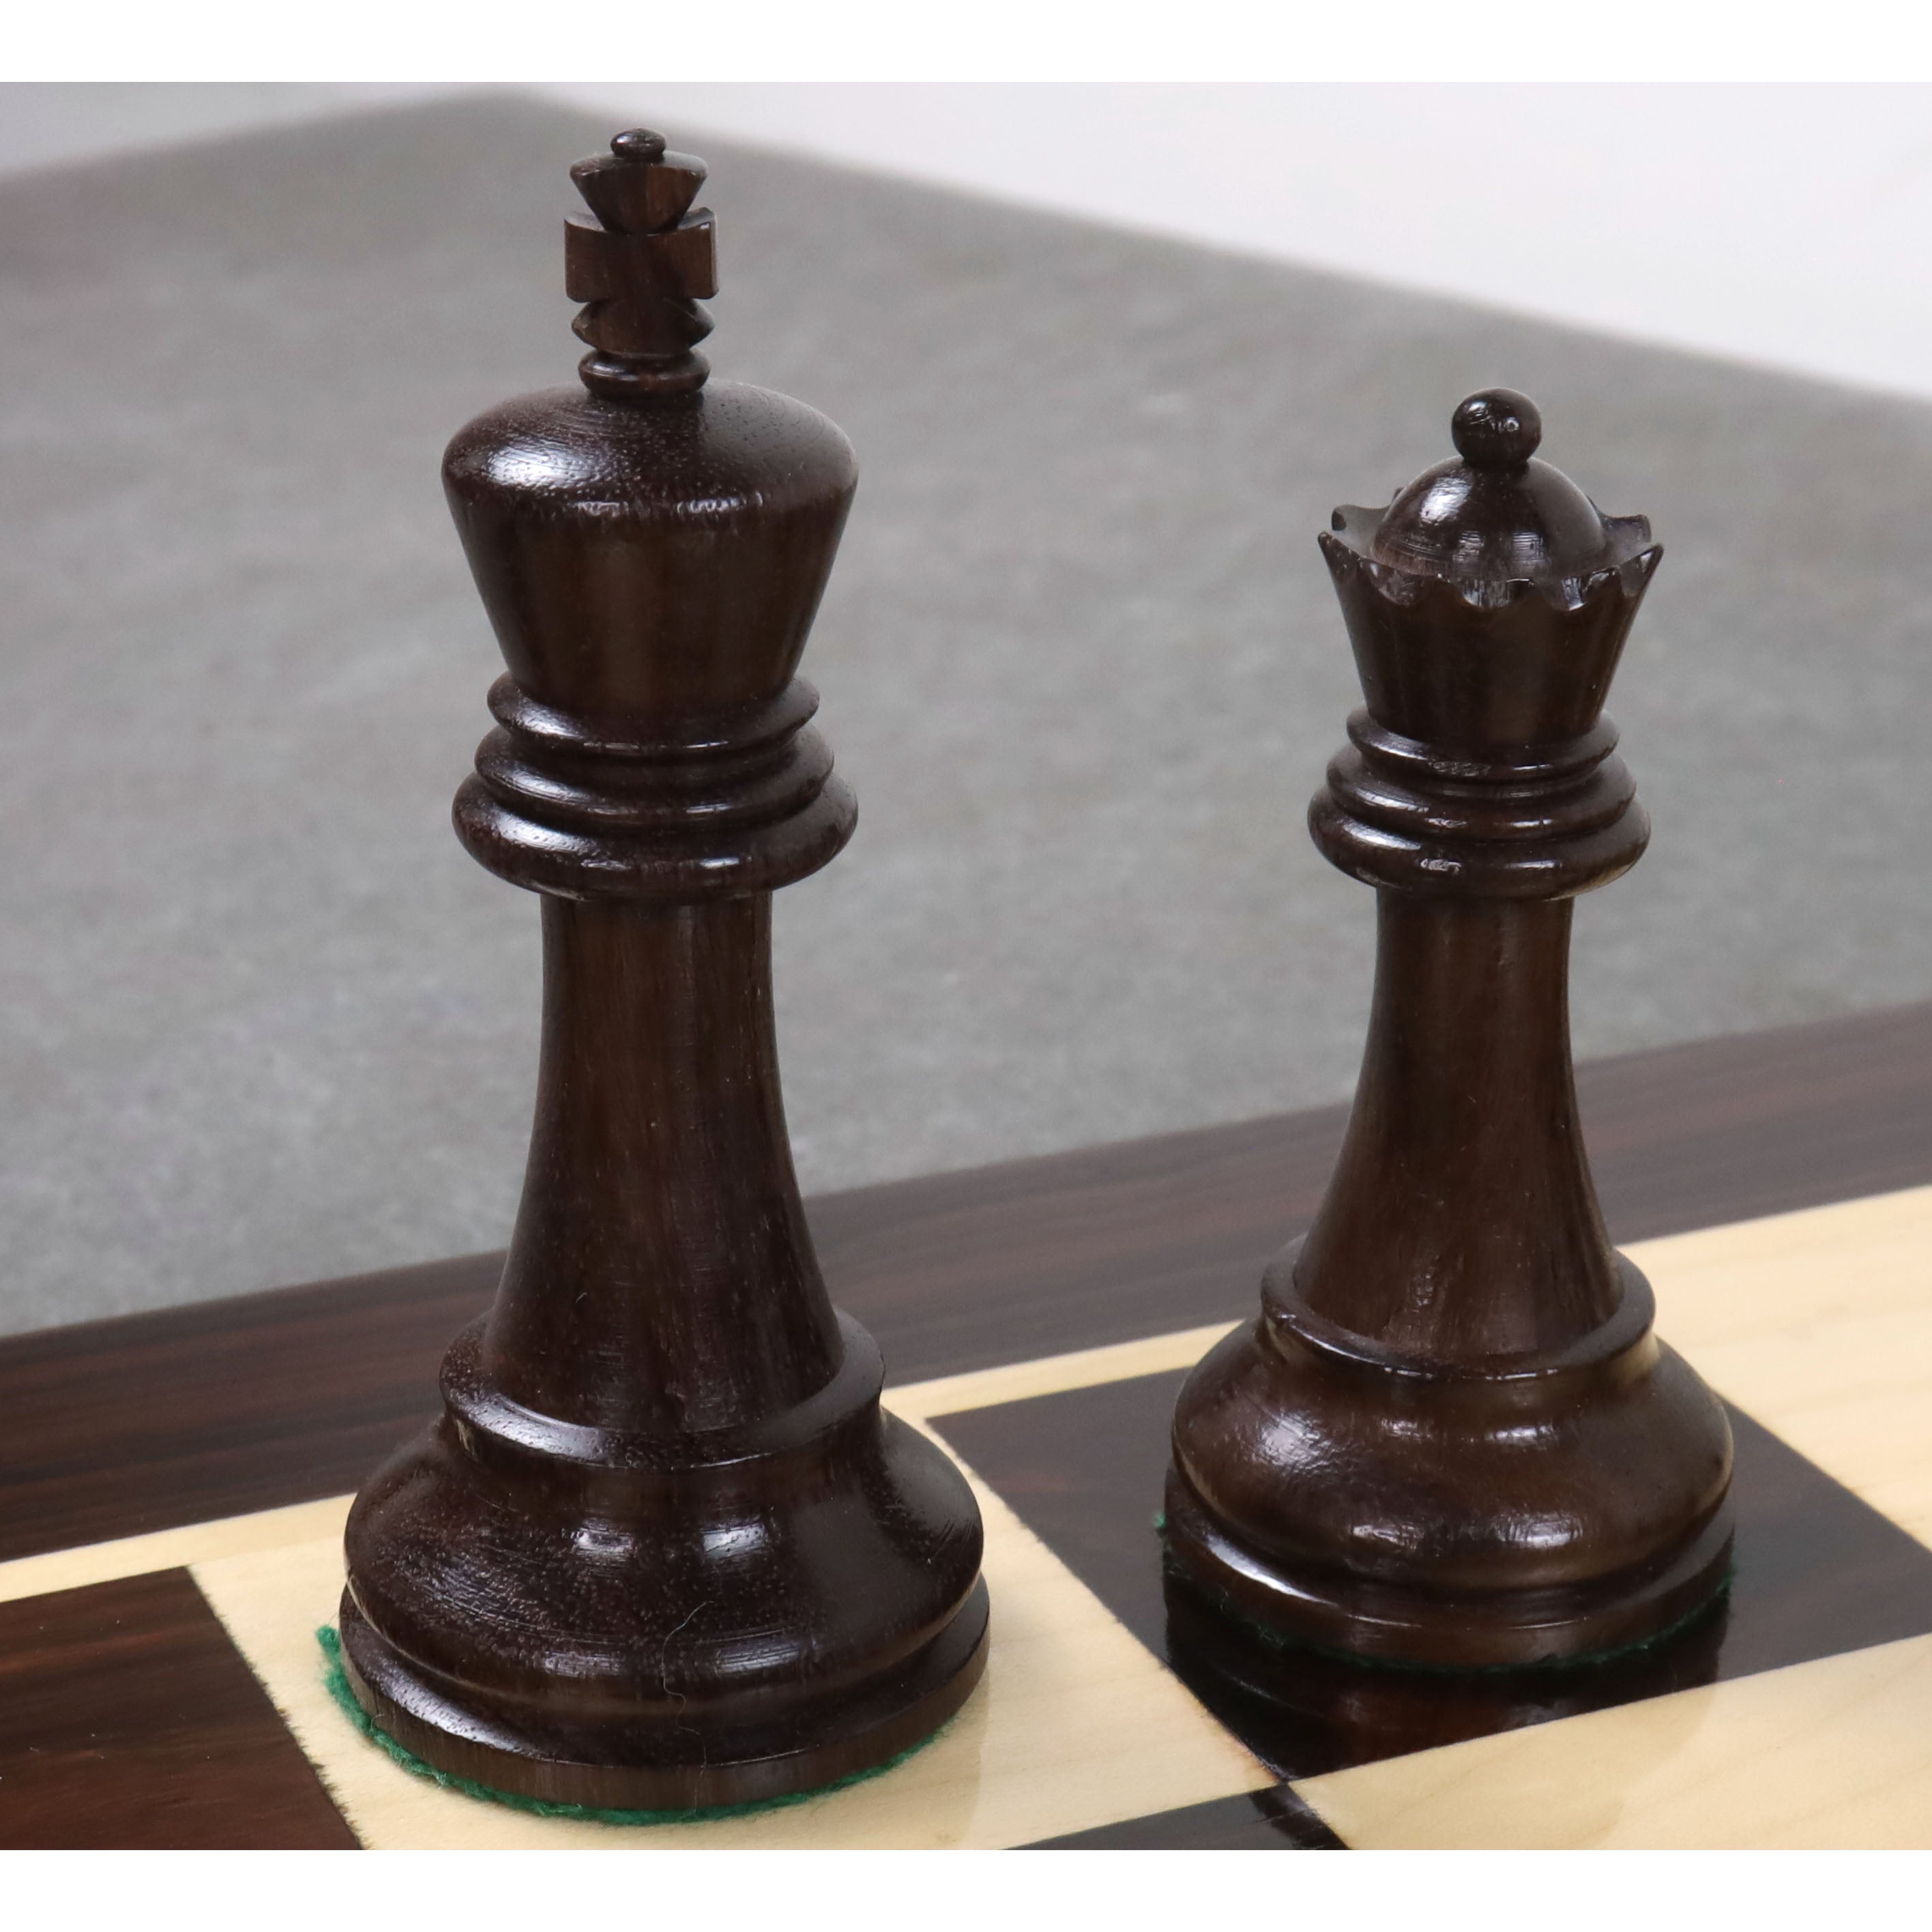 Slightly Imperfect Leningrad Staunton Chess Pieces Only Set - Rosewood & Boxwood - 4" King